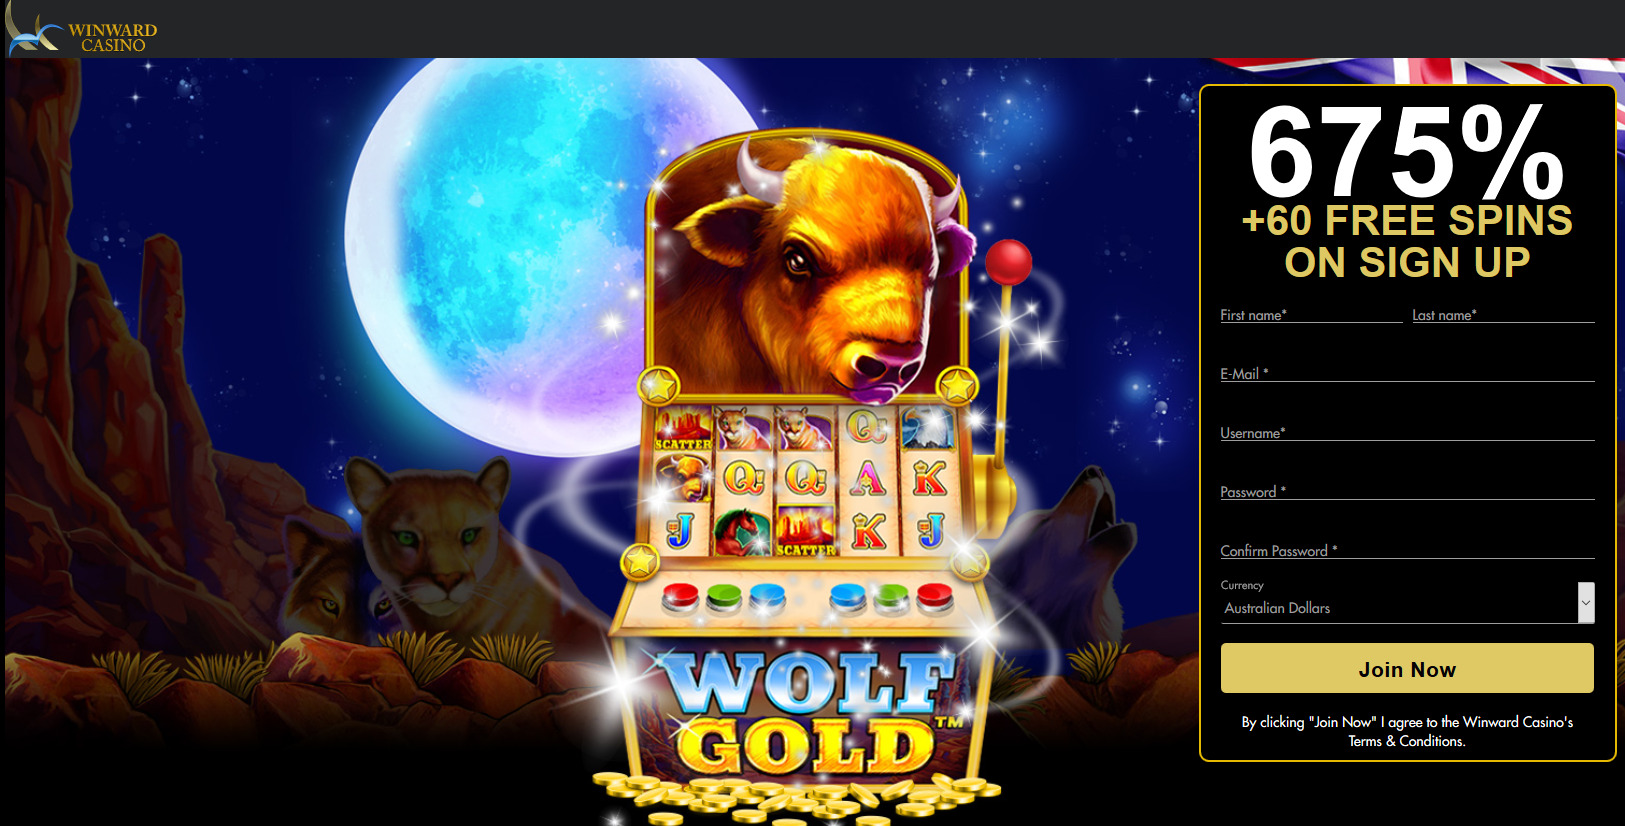 Winward Casino 675
                                                % + 60 Wolf Gold